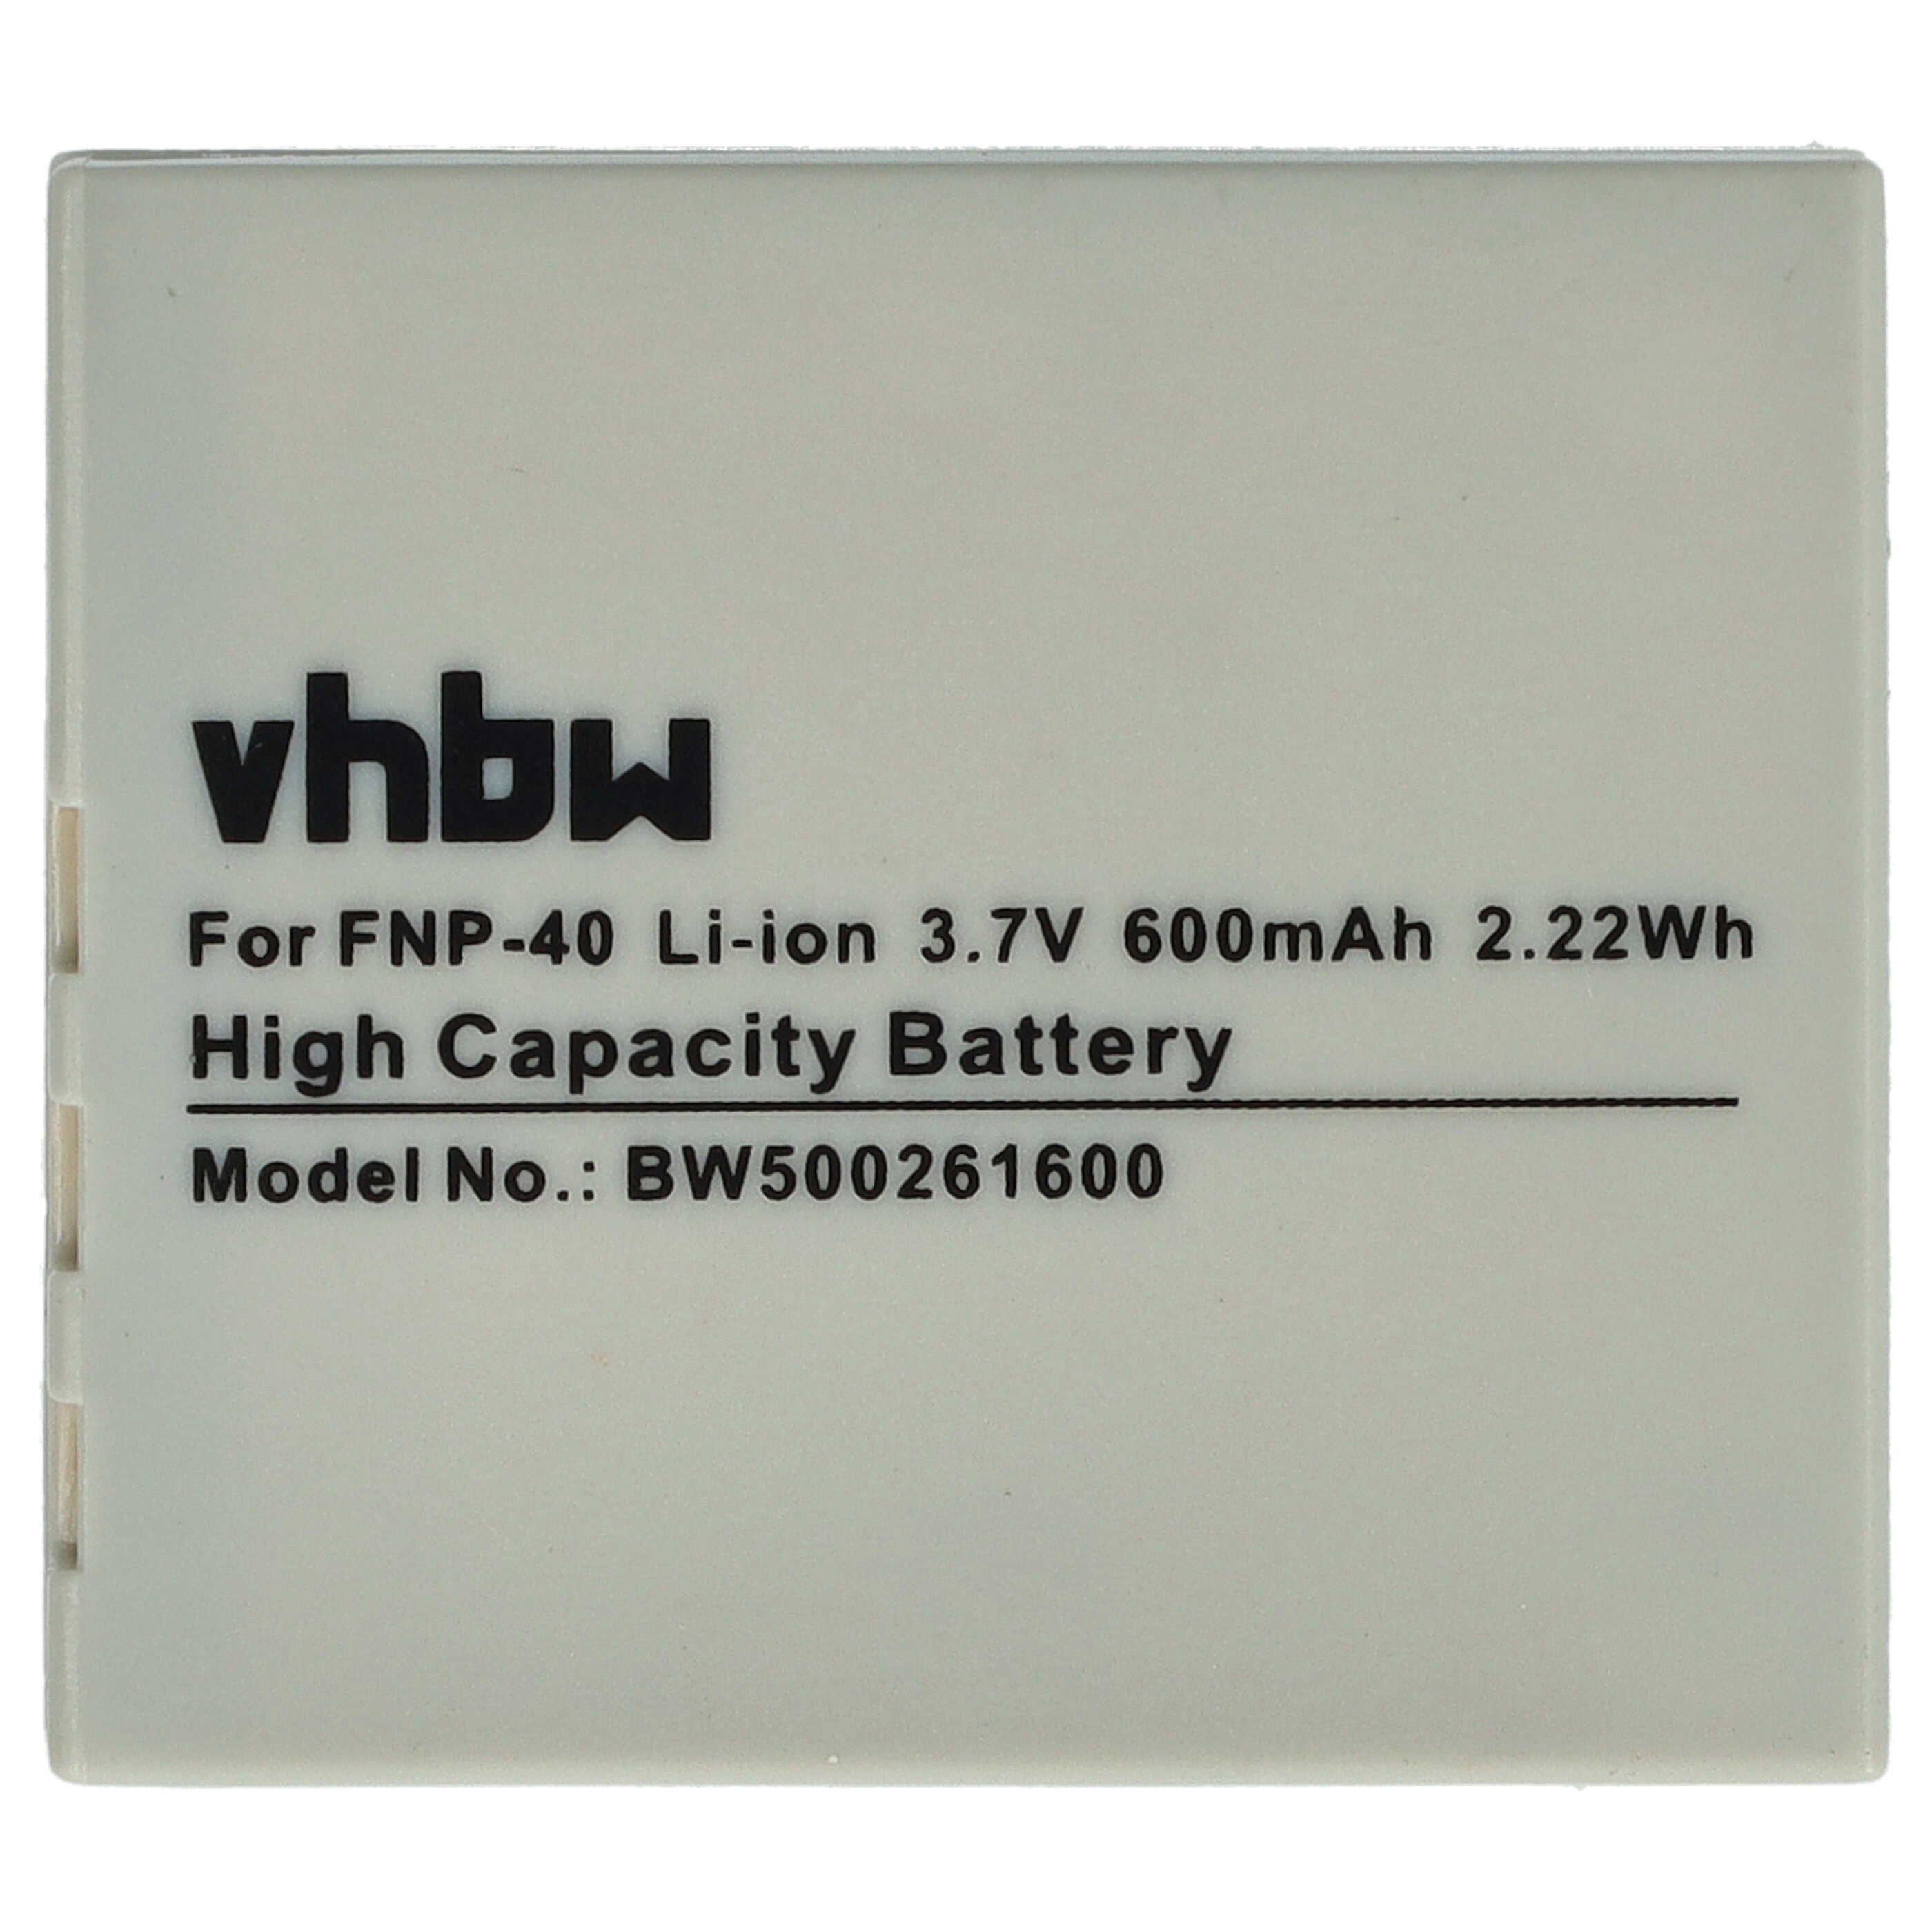 Batterie remplace Fuji / Fujifilm NP-40, NP-40N pour appareil photo - 500mAh 3,6V Li-ion